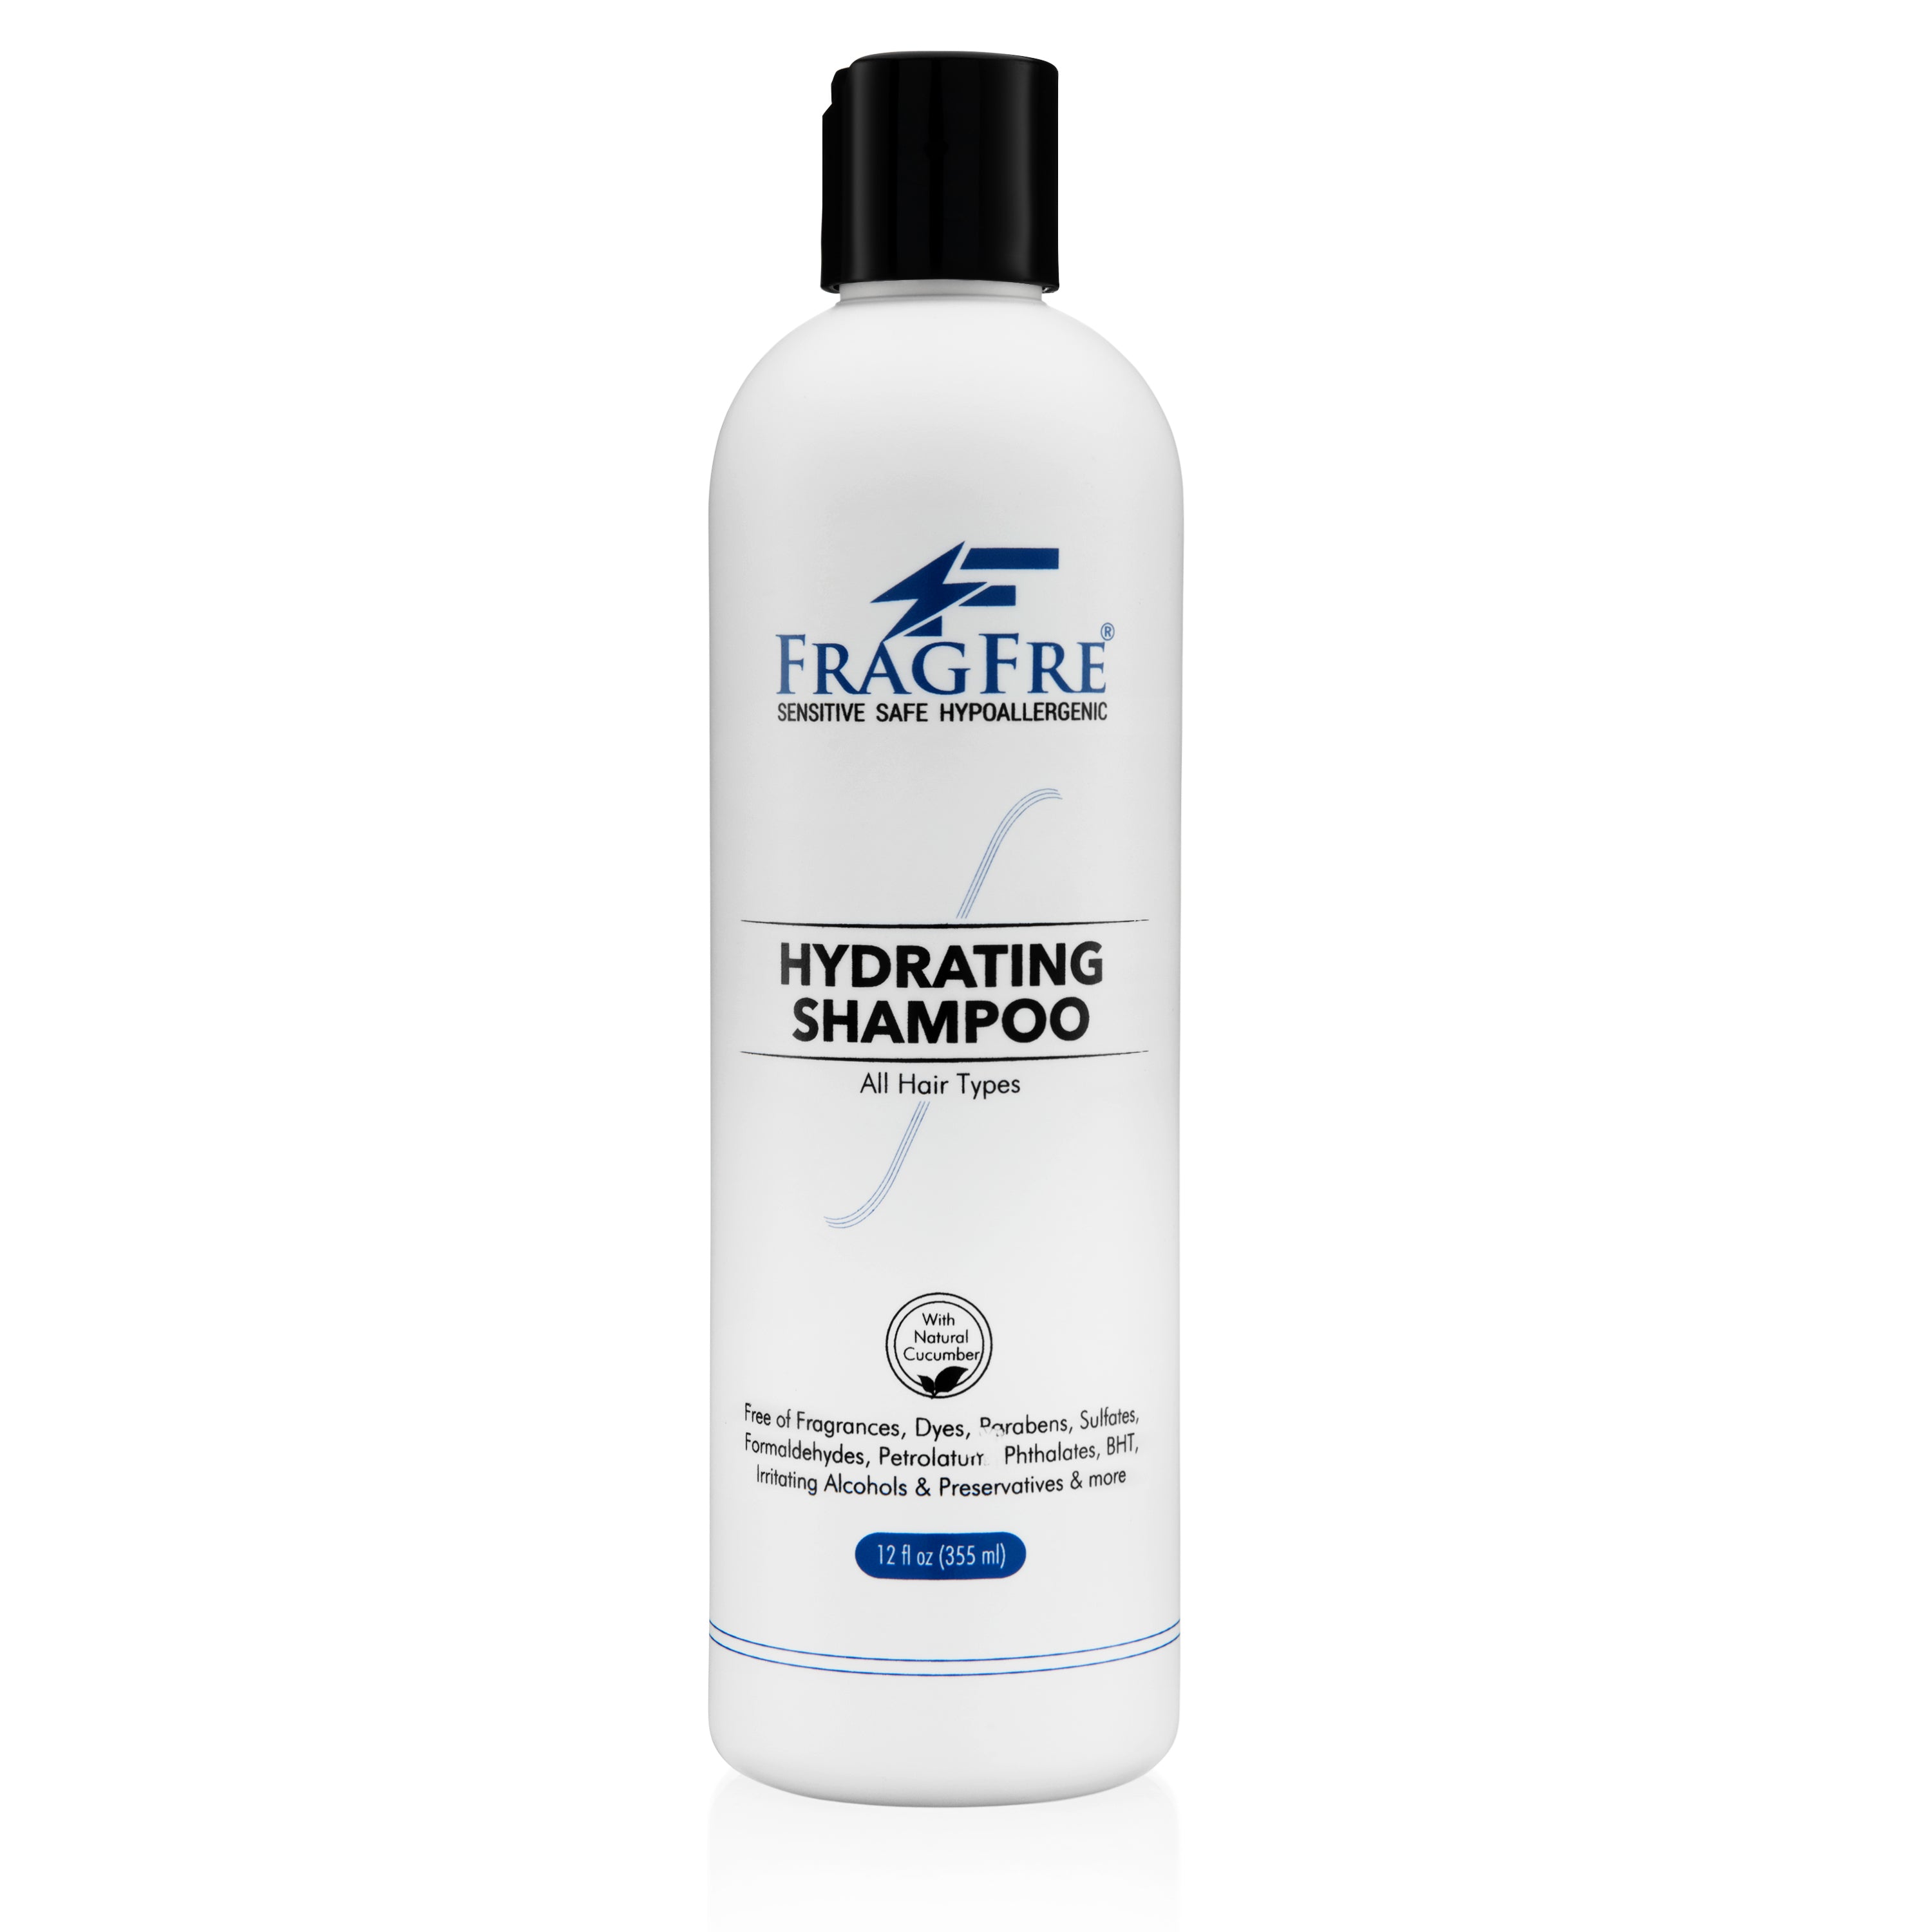 FRAGFRE Hydrating Shampoo 12oz - Hypoallergenic Sulfate Free Shampoo for Sensitive Skin - Vegan Glut